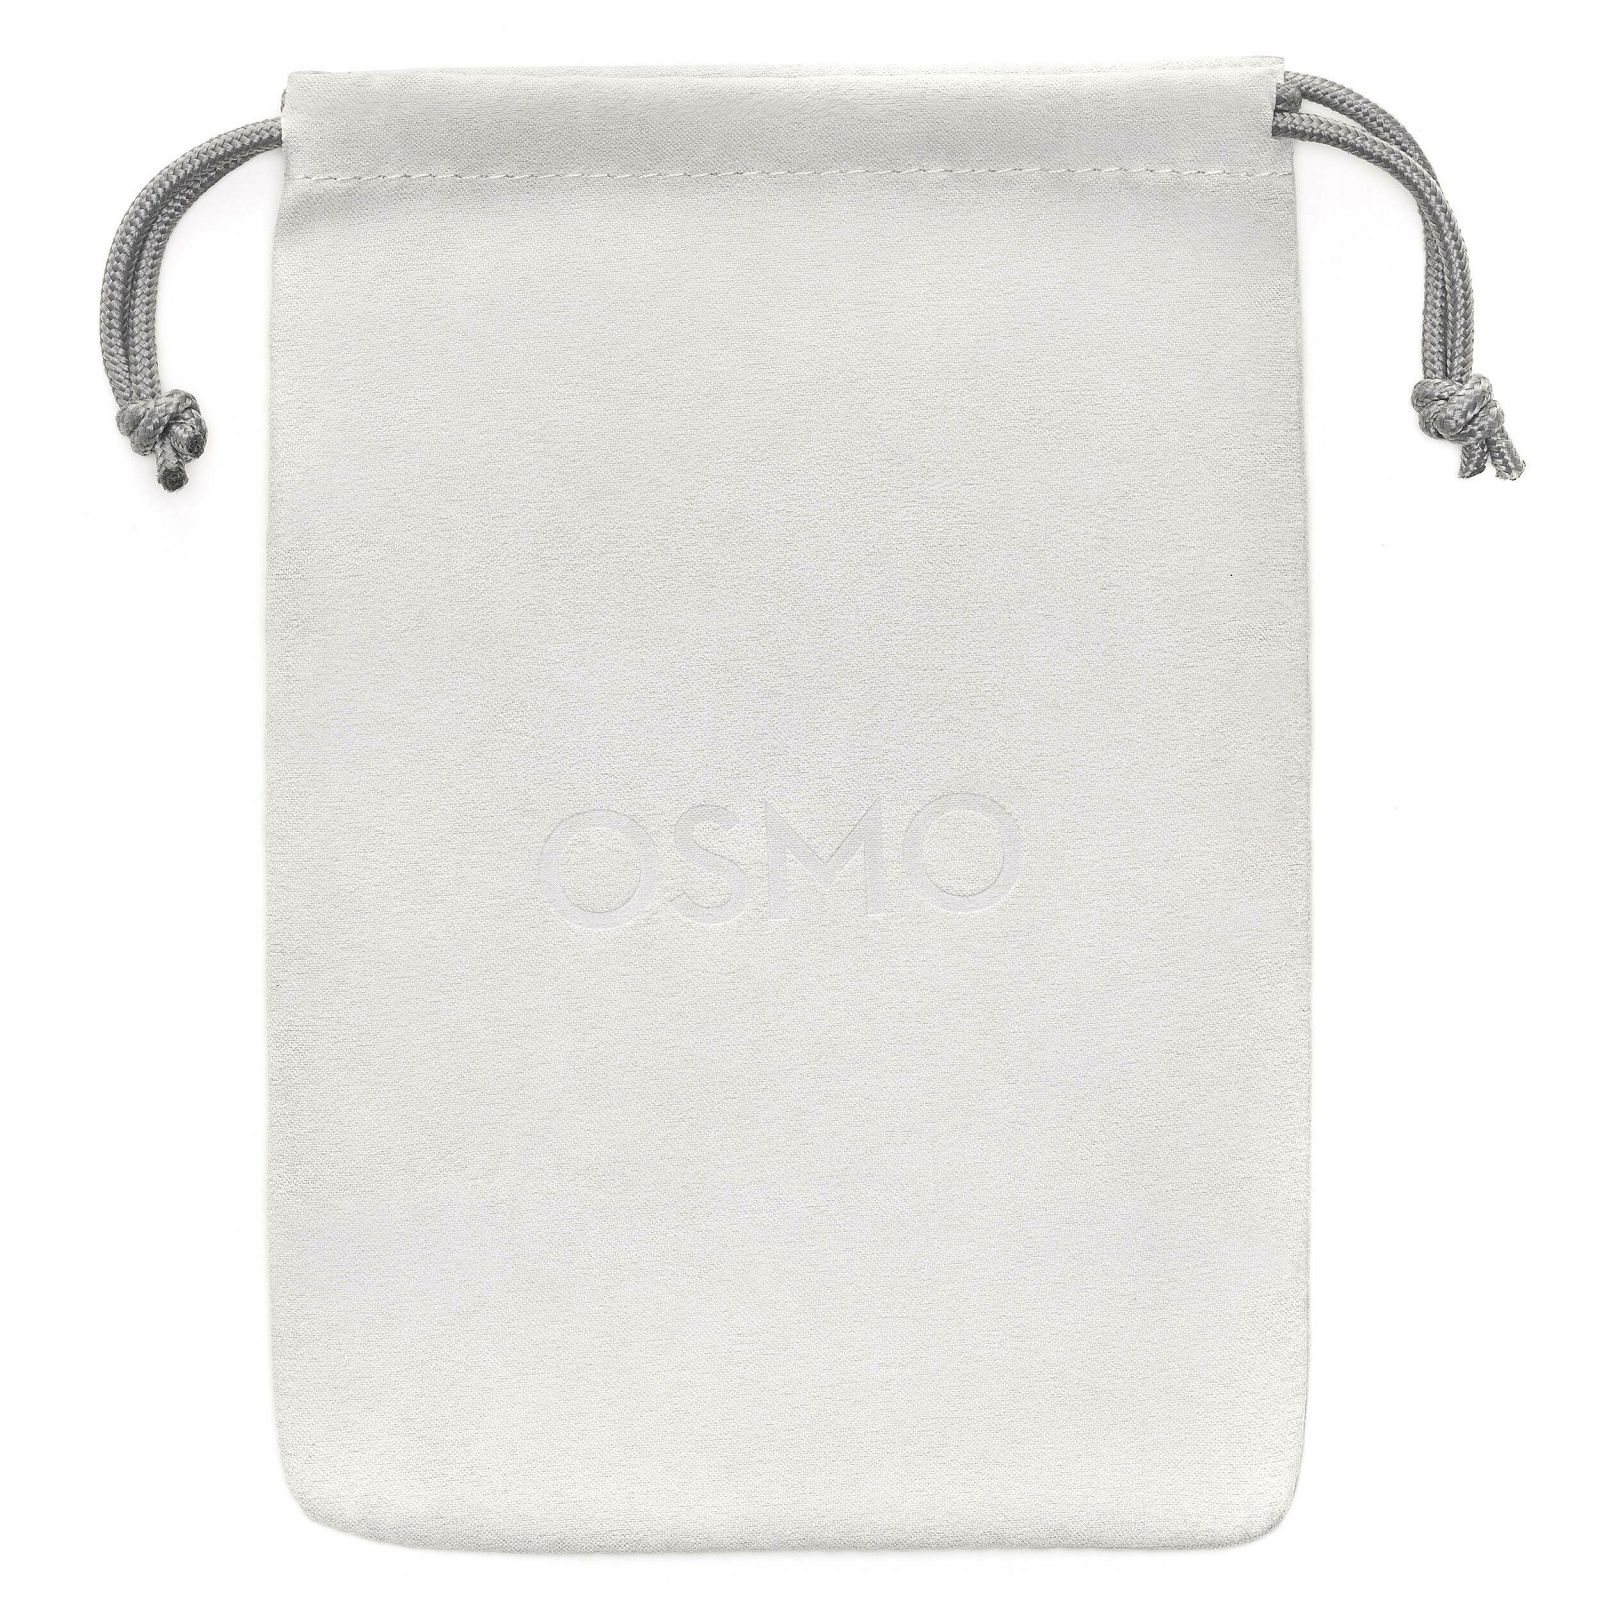 DJI Osmo Mobile 6 Platinum Gray